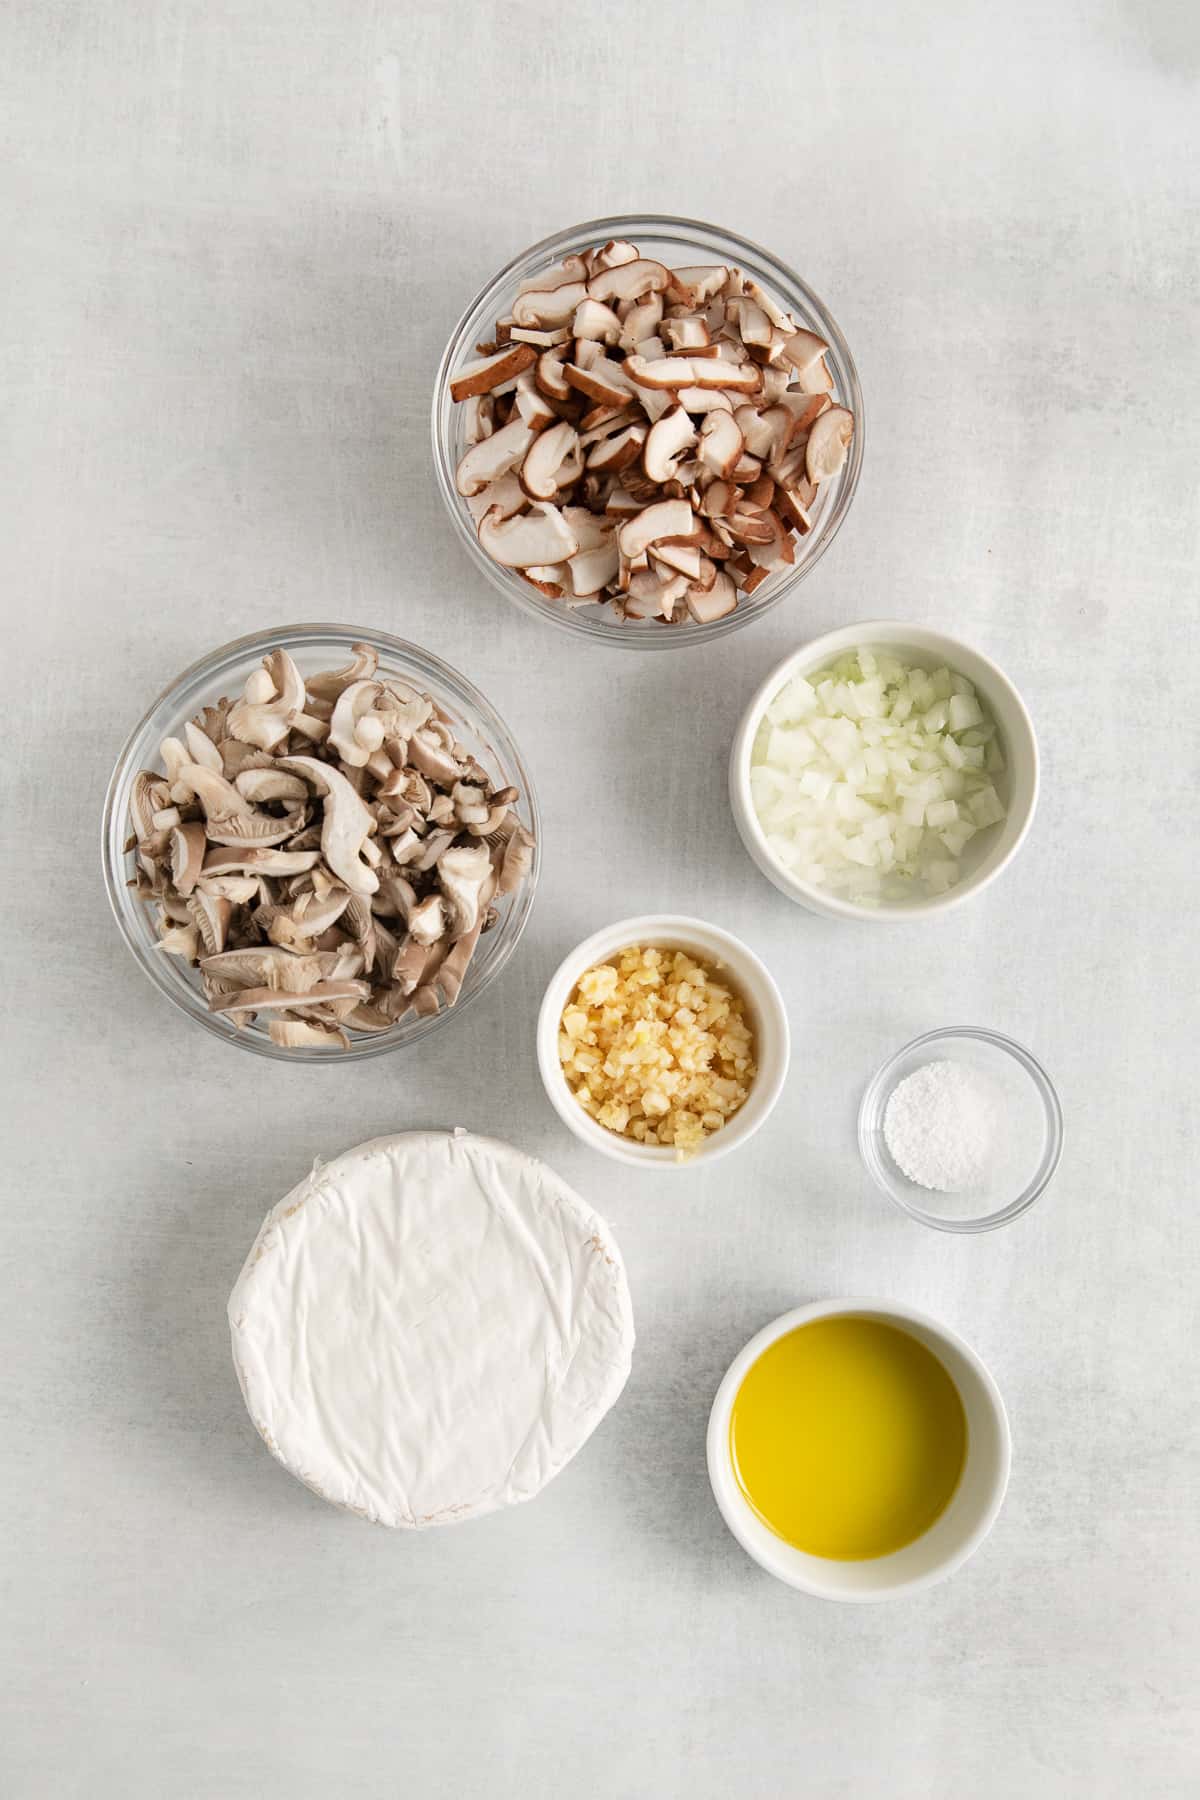 Ingredients for mushroom ravioli.